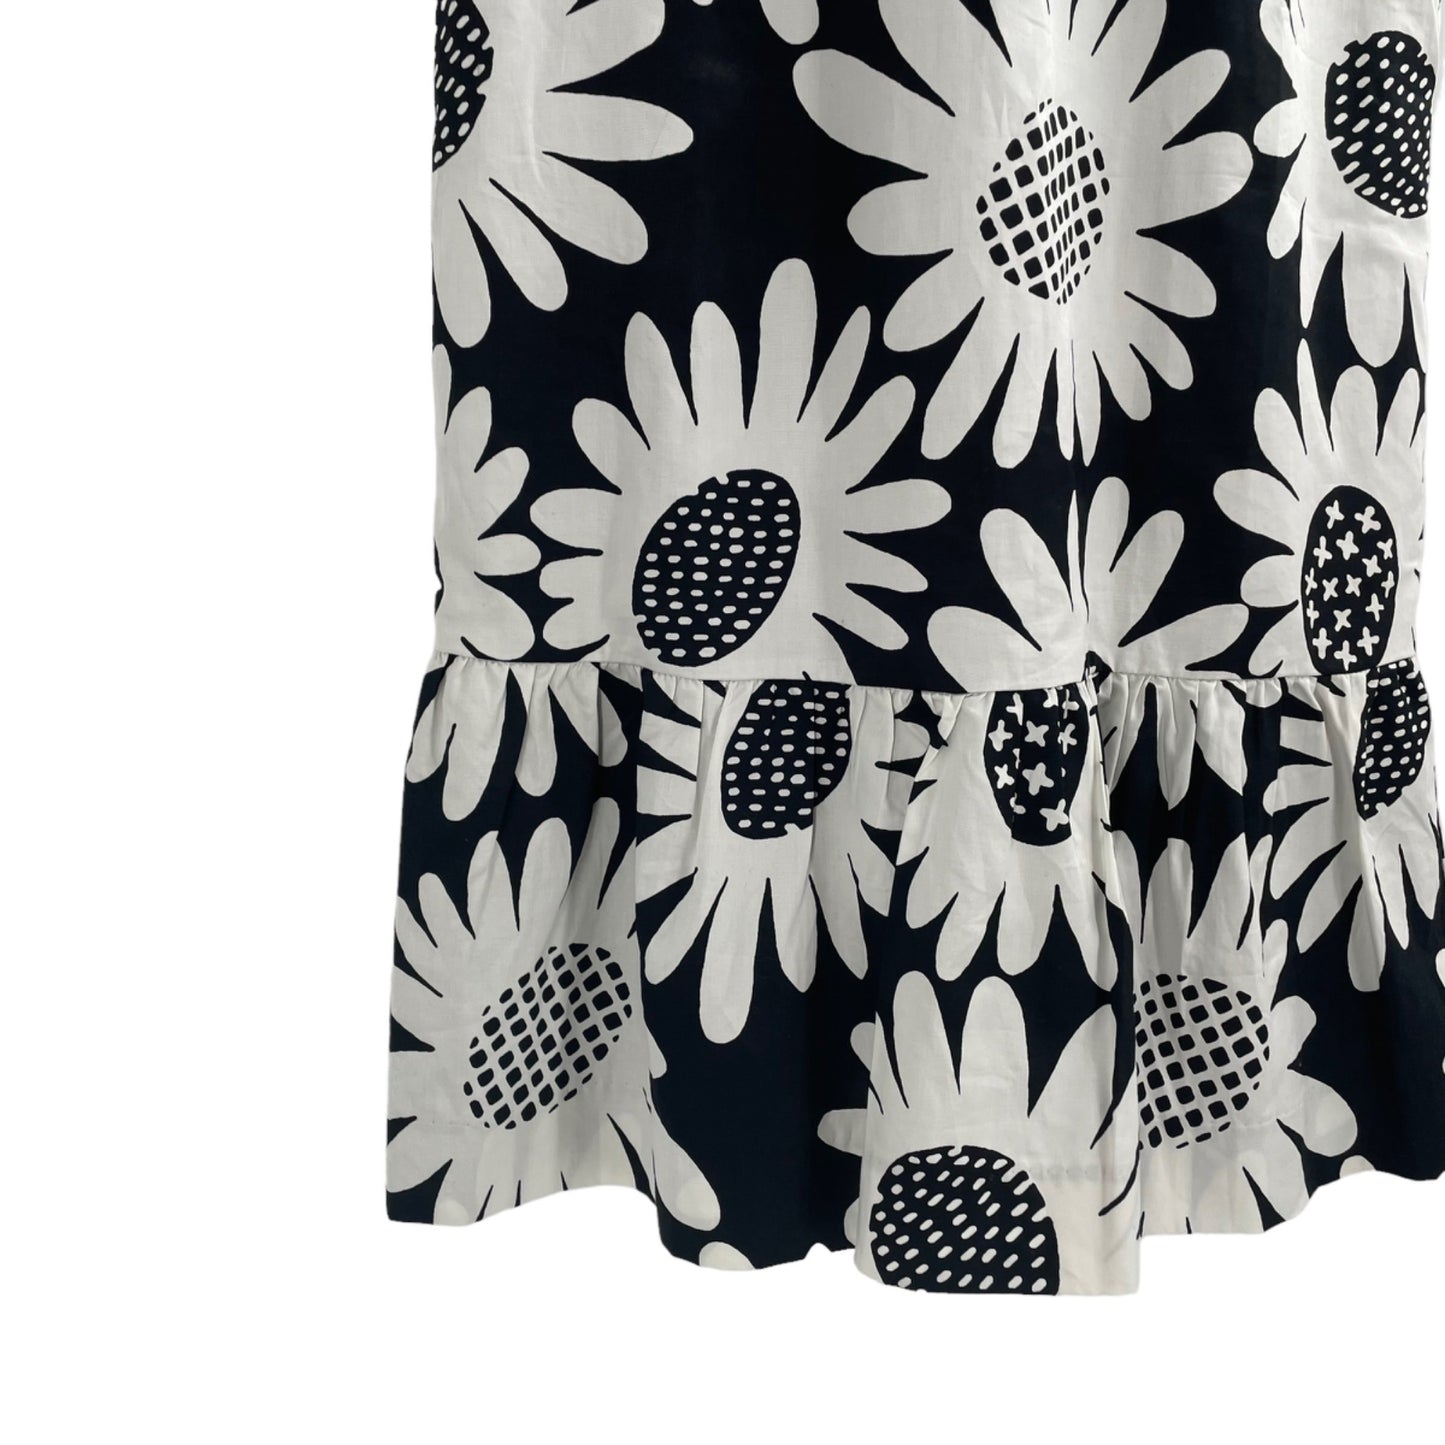 Victoria Beckham Target Black White Daisy Print Scallop Trim Dress Womens Small